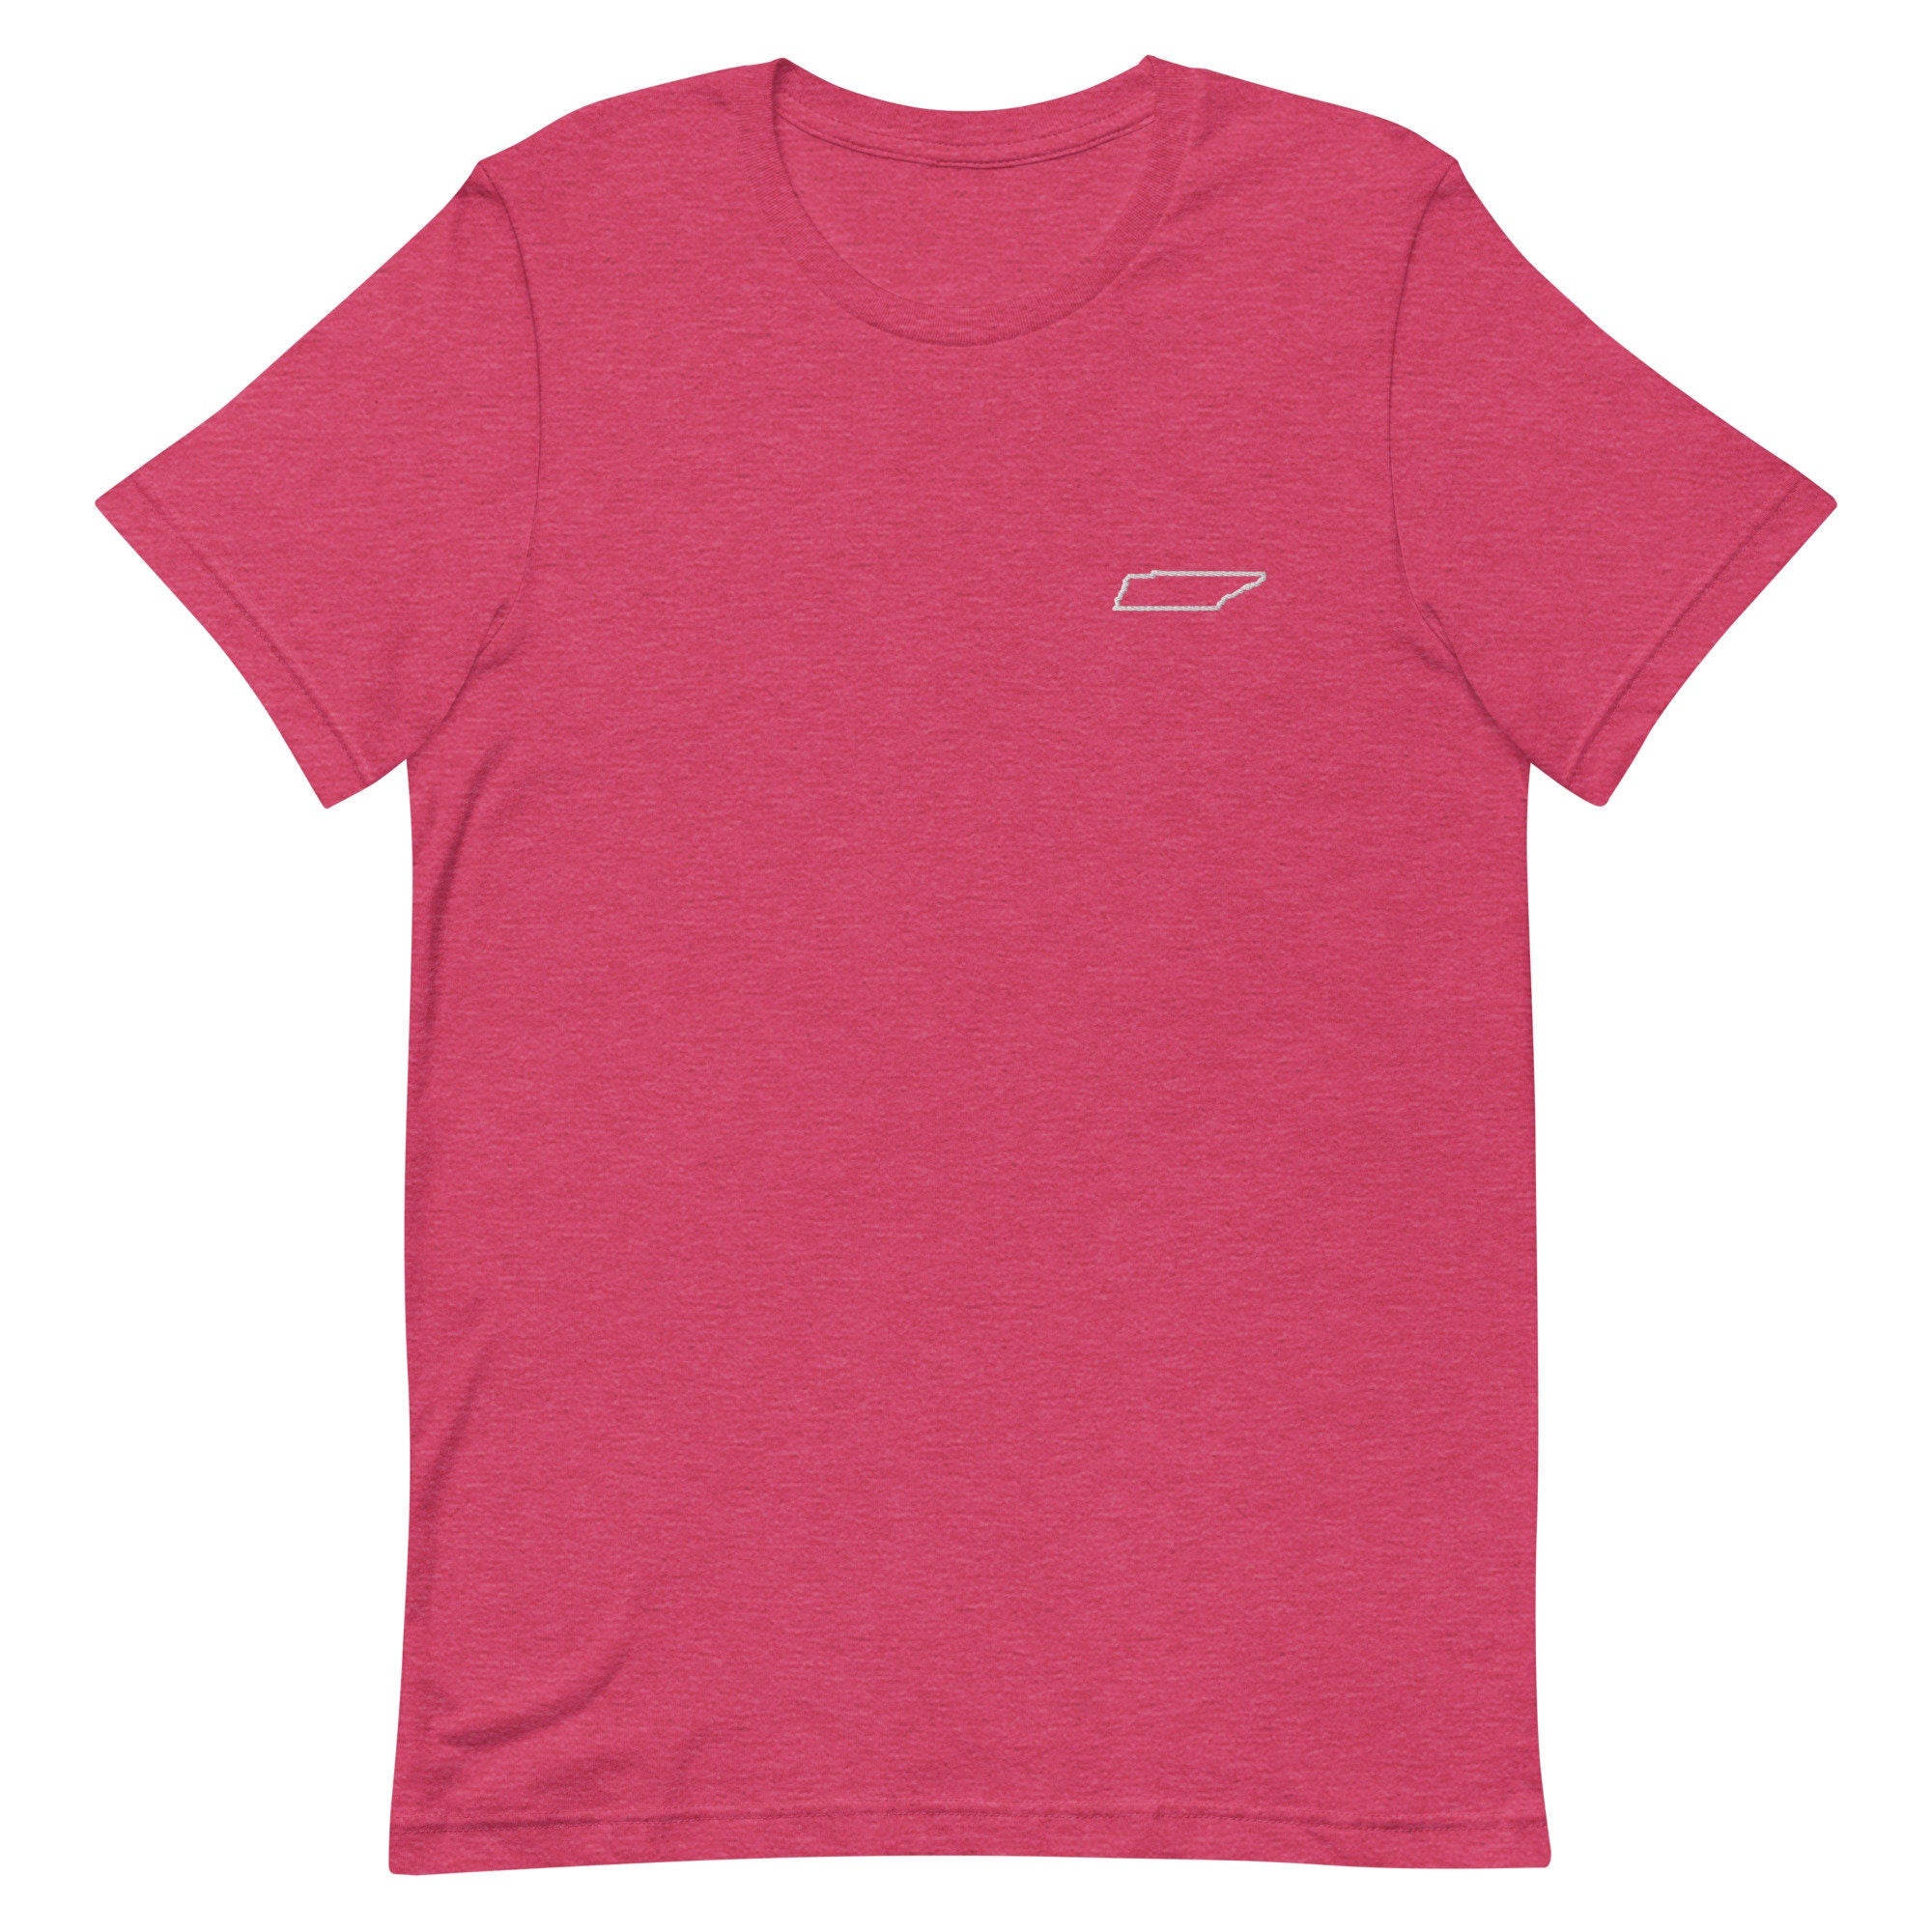 Tennessee Premium Men's T-Shirt, Embroidered Men's T-Shirt Gift for Boyfriend, Men's Short Sleeve Shirt - Multiple Colors